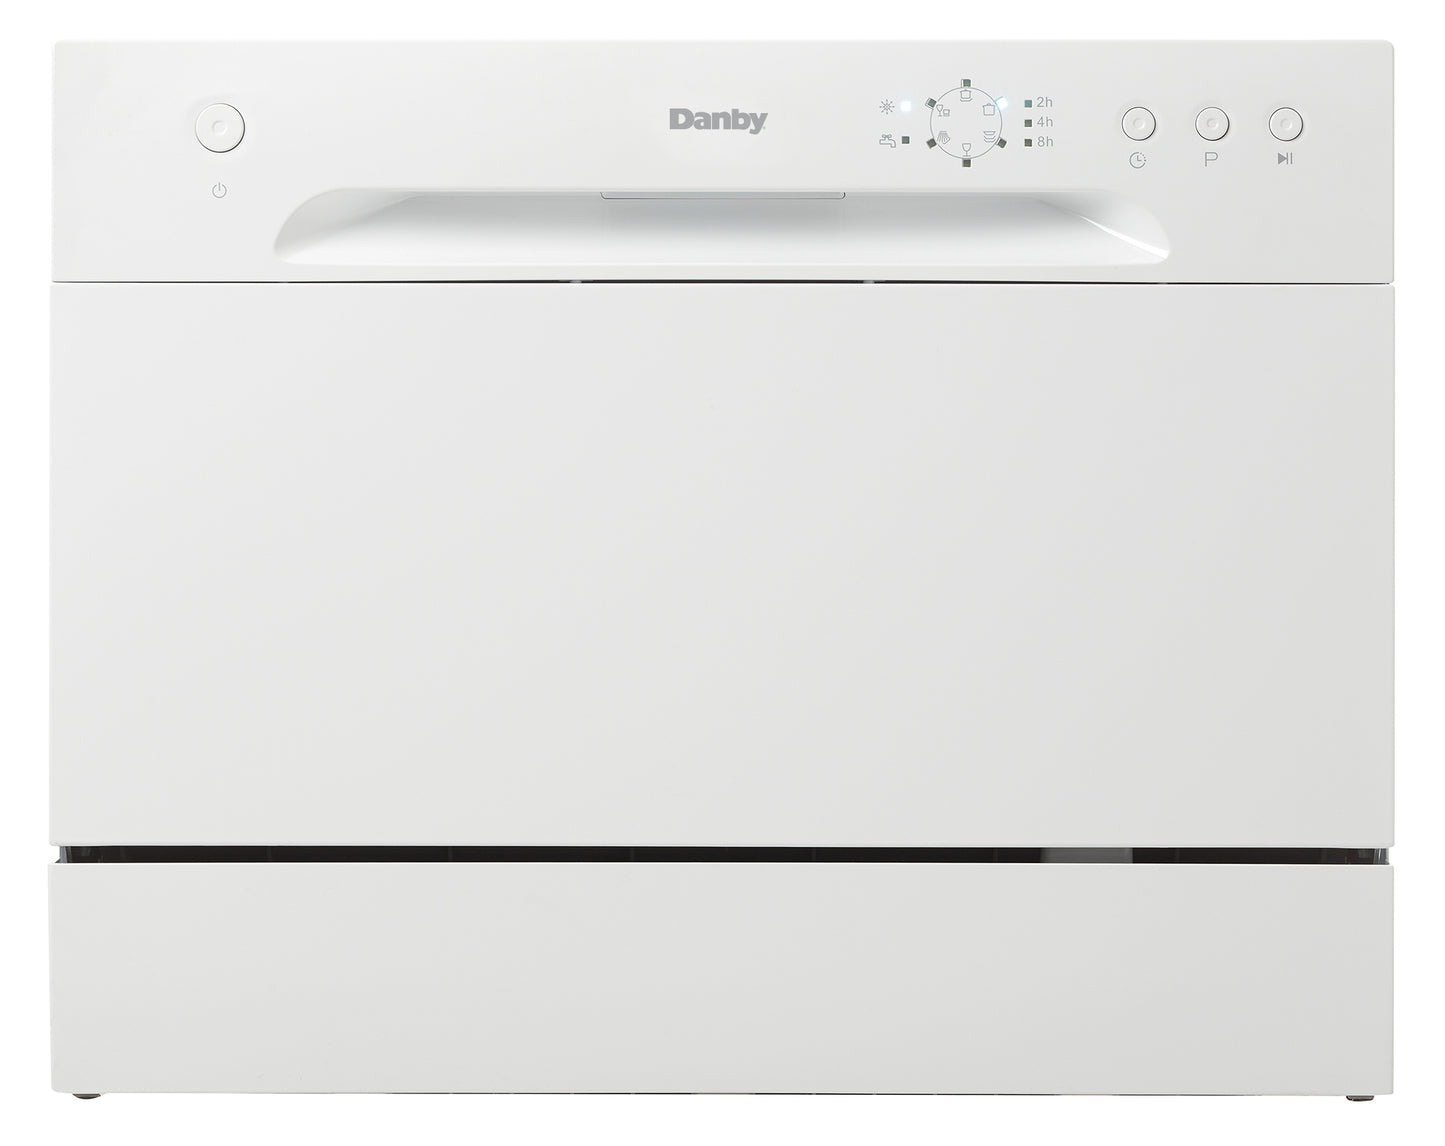 Danby 6 Place Setting Countertop Dishwasher - White